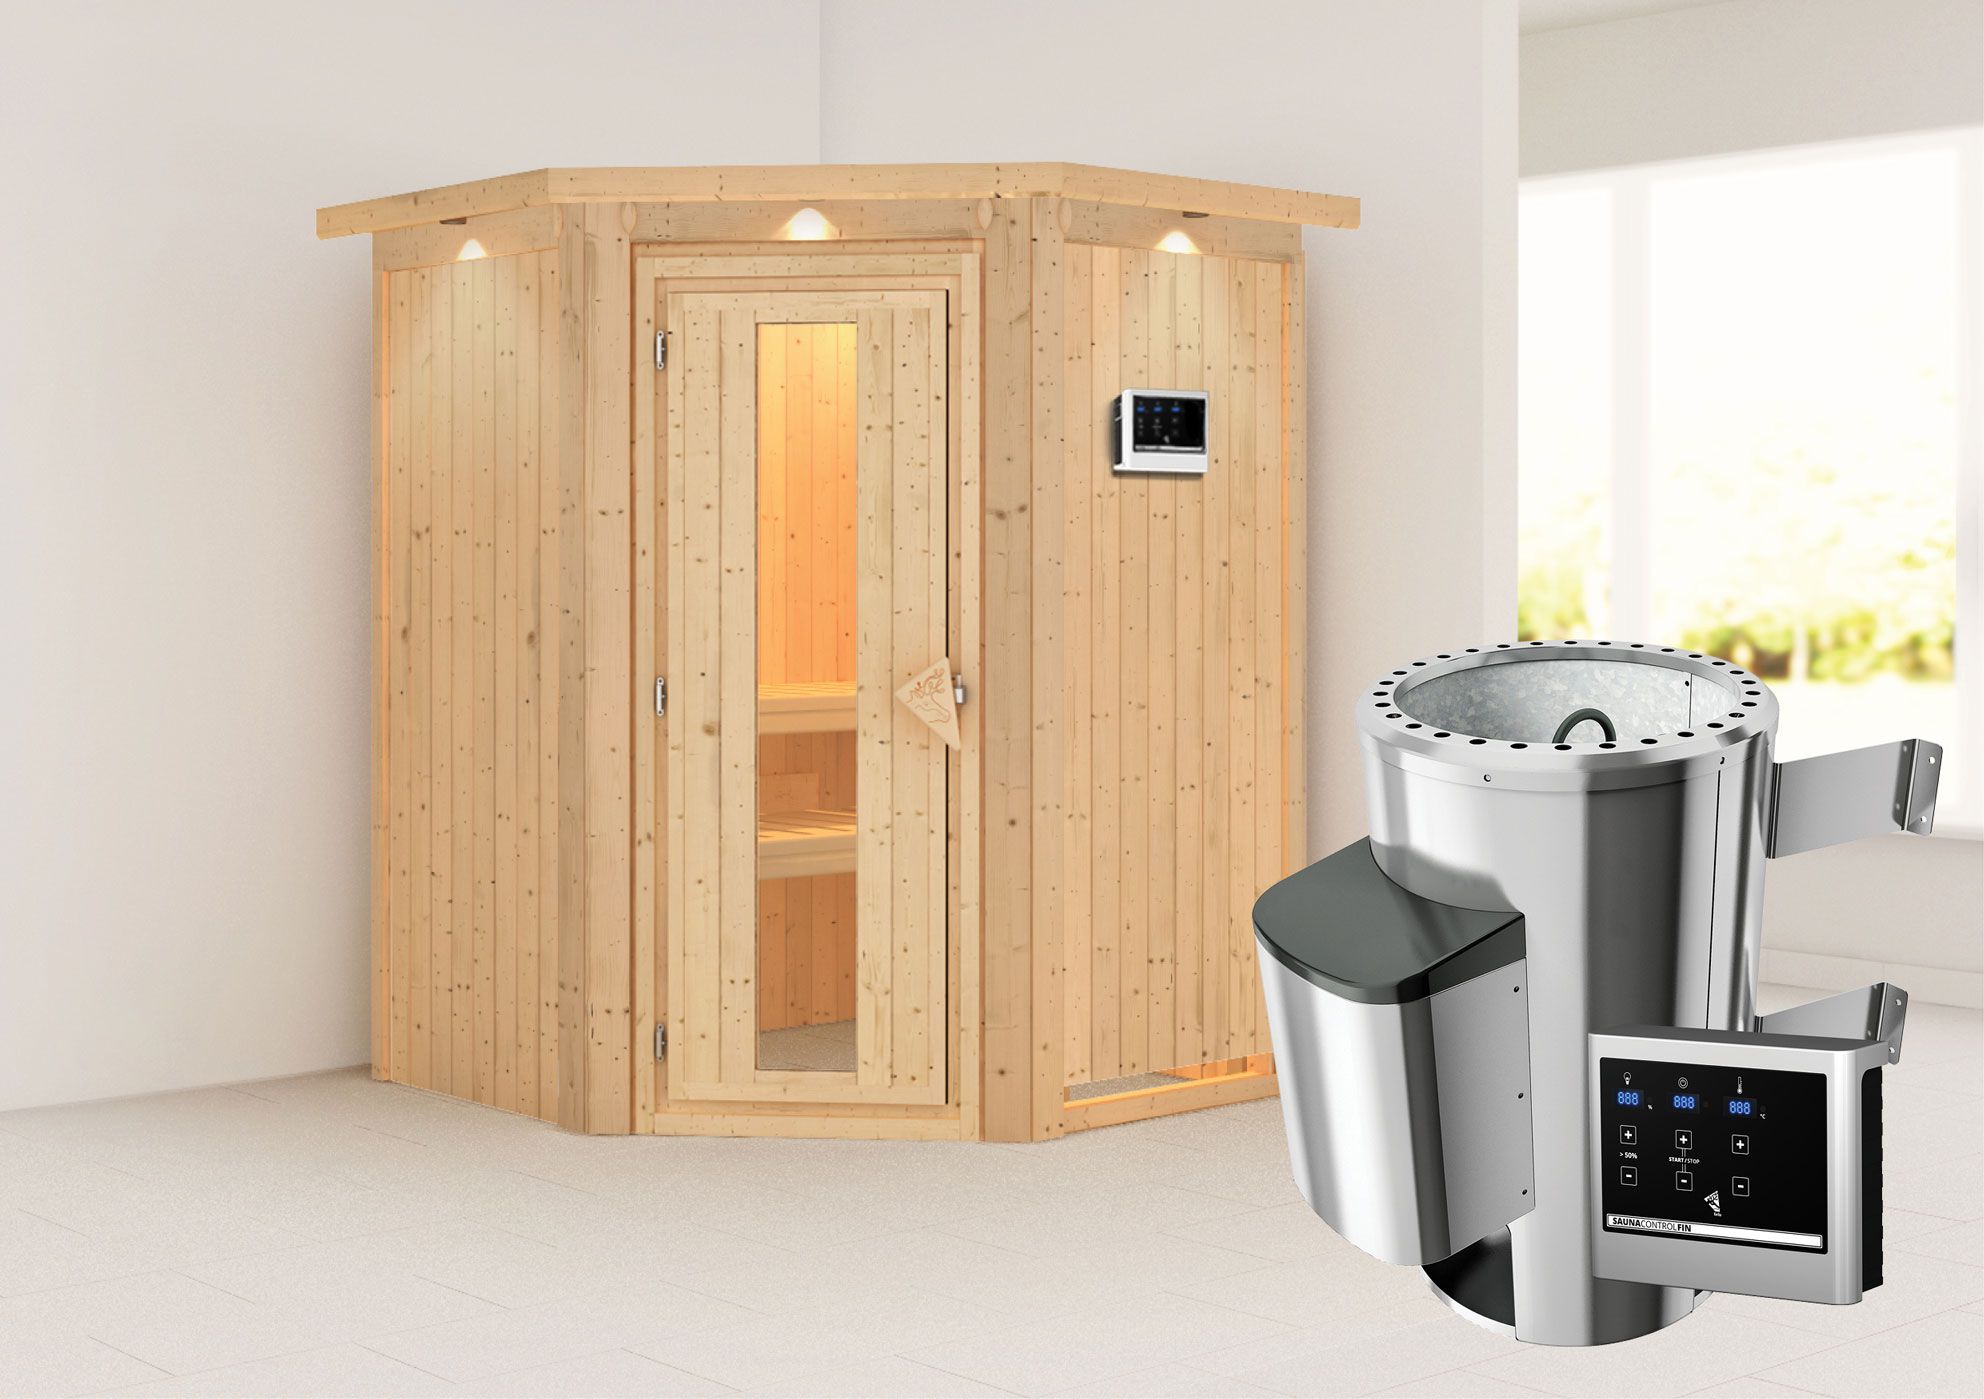 Sauna "Loran" SET met energiebesparende deur en kroon - kleur: natuur, kachel externe regeling eenvoudig 3,6 kW - 165 x 165 x 202 cm (B x D x H)